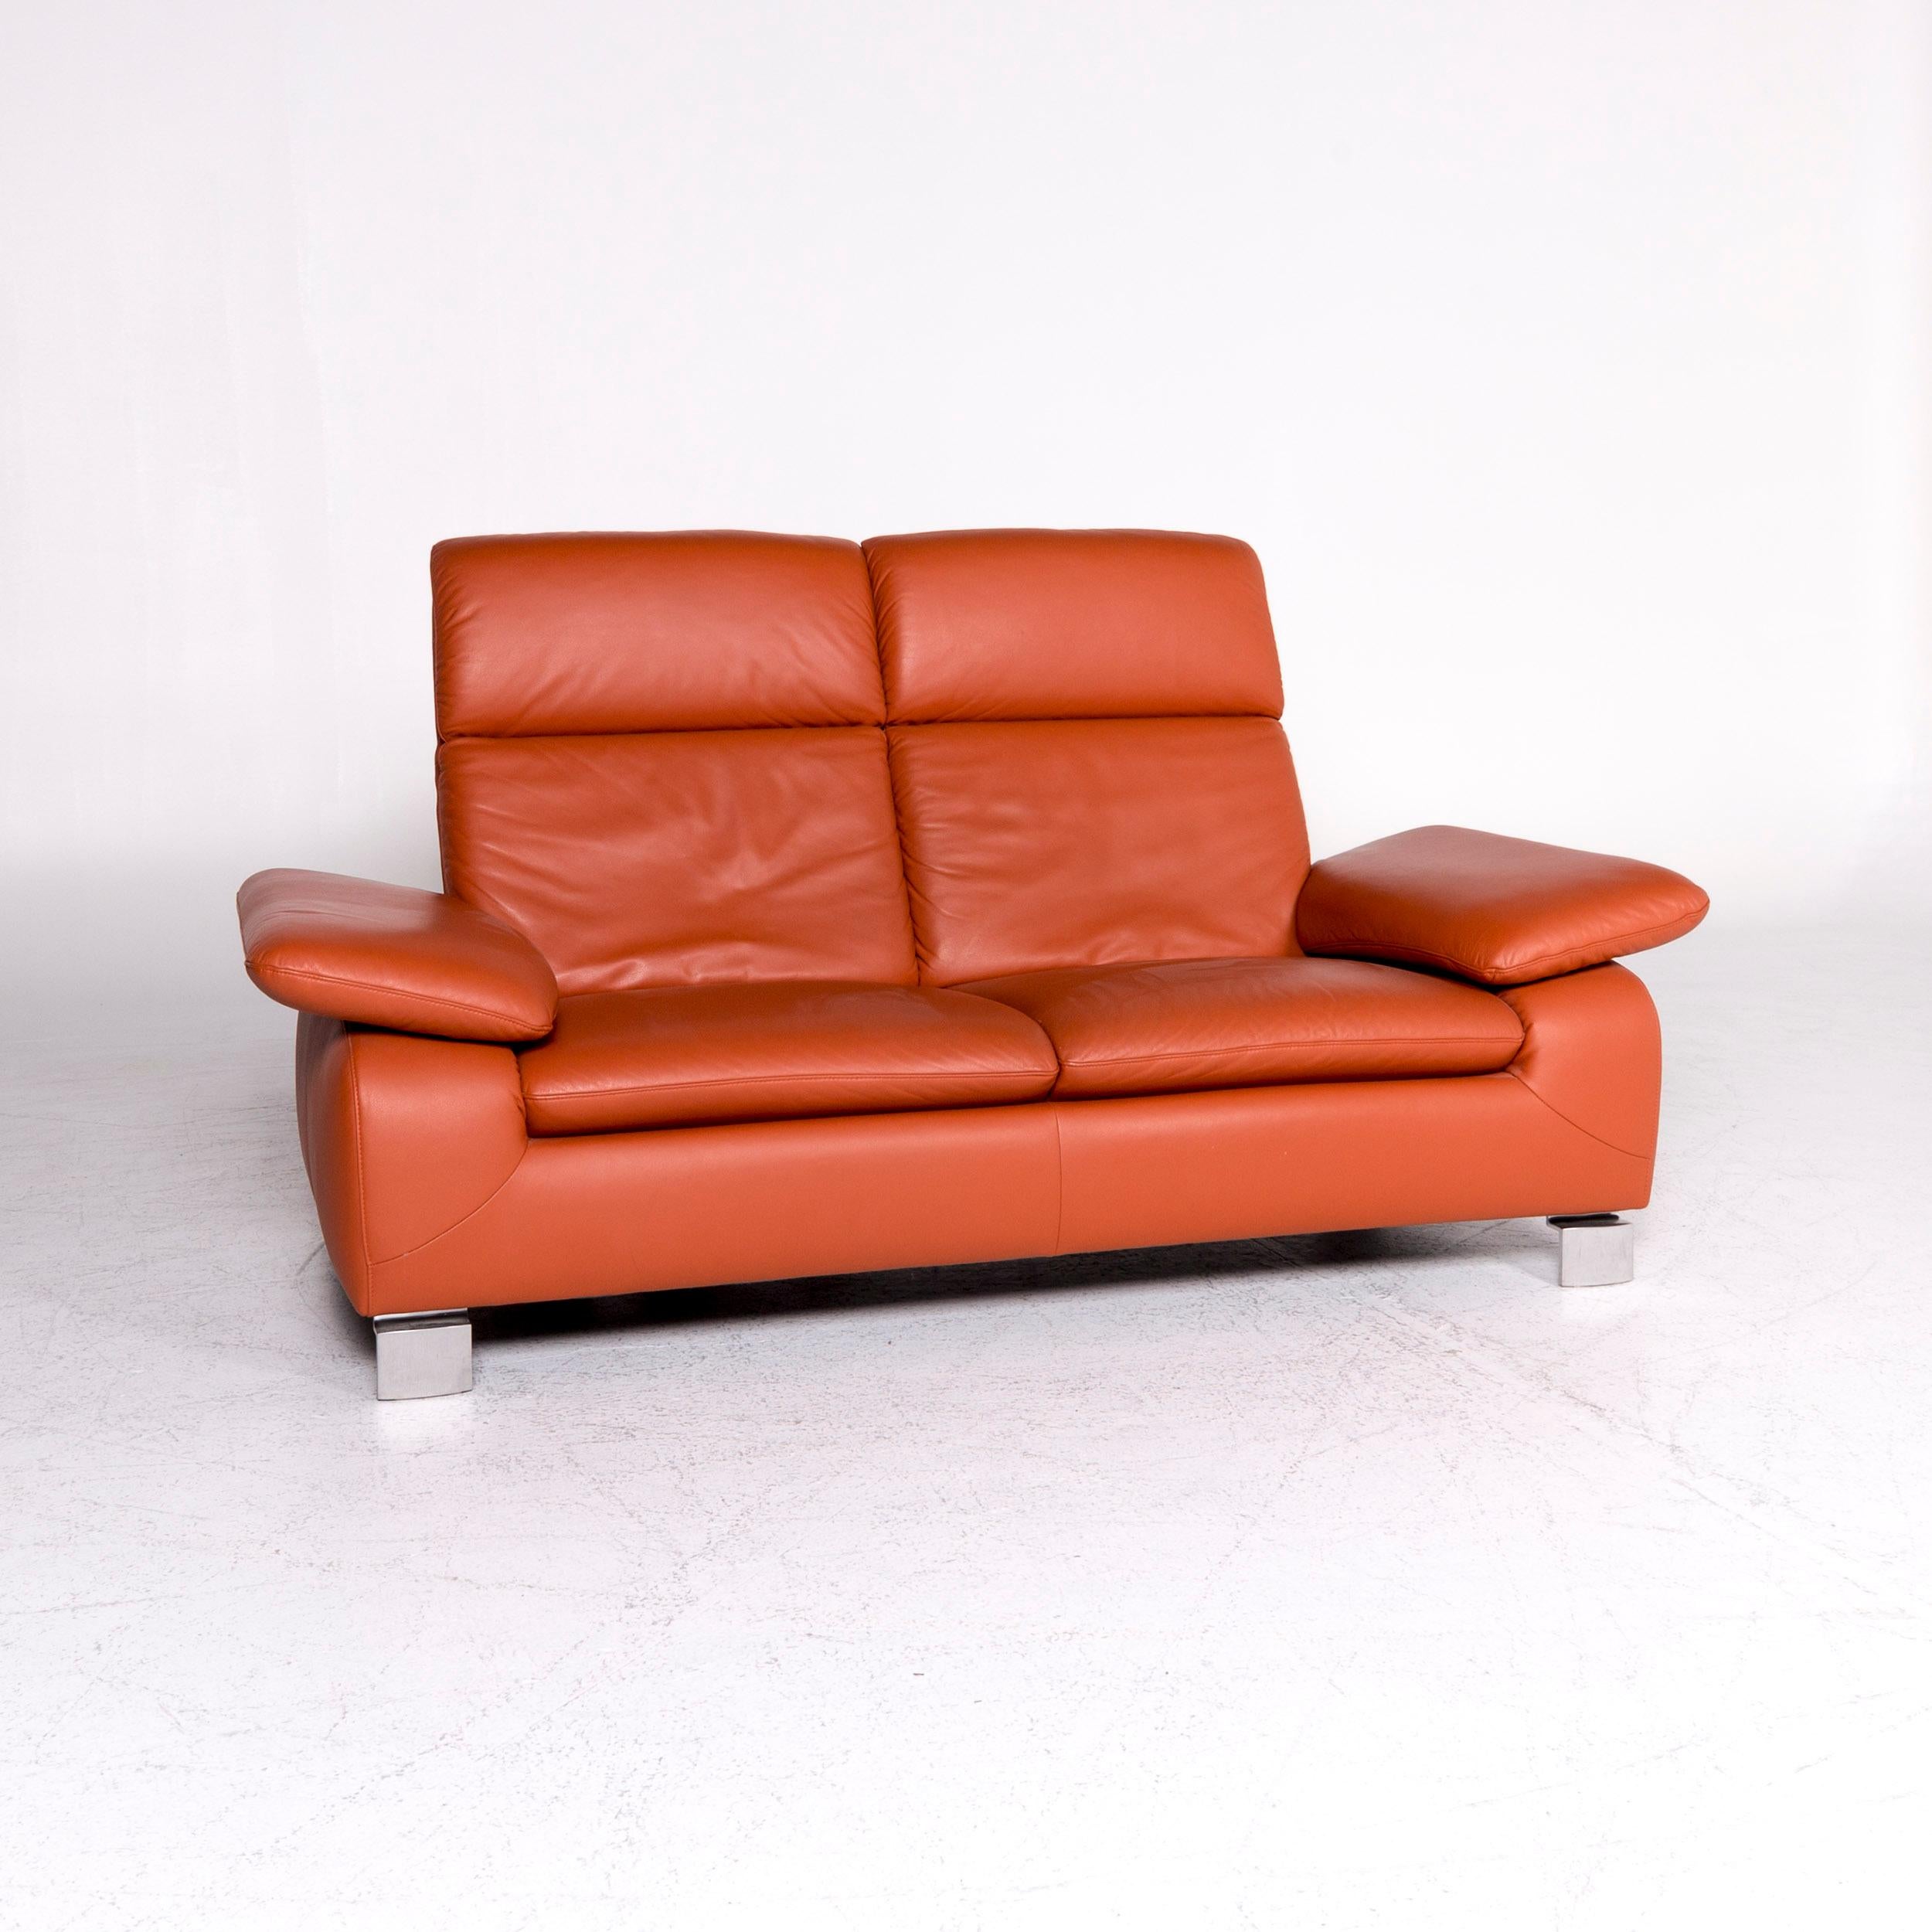 Modern Ewald Schillig Designer Leather Sofa Orange Two-Seat Couch For Sale